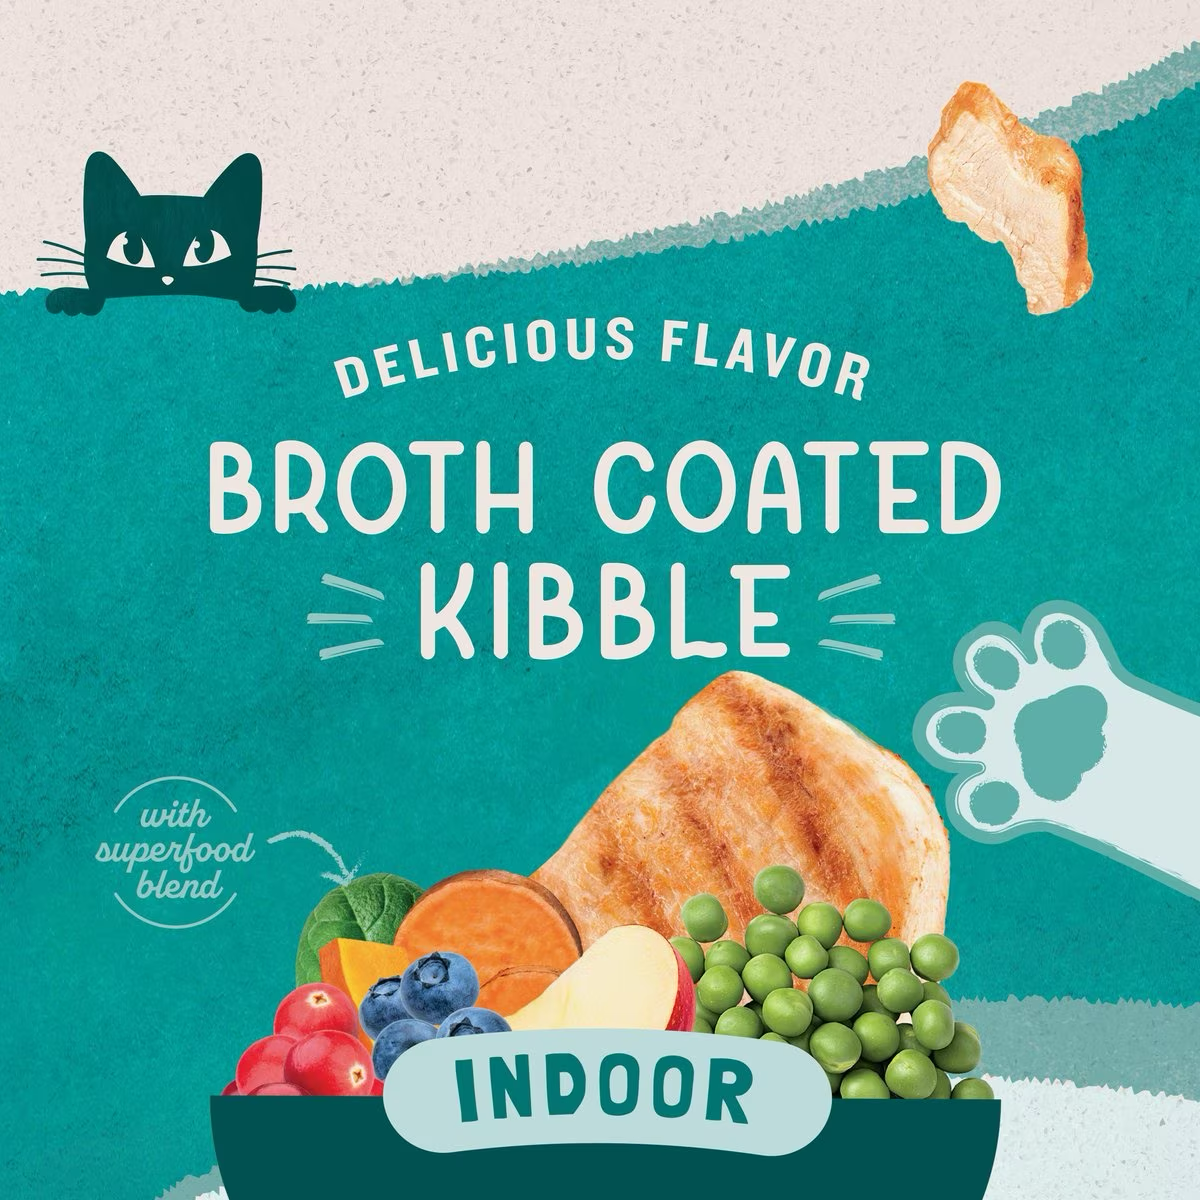 Natural Balance Original Ultra Indoor Chicken & Salmon Meal Dry Cat Food  Cat Food  | PetMax Canada